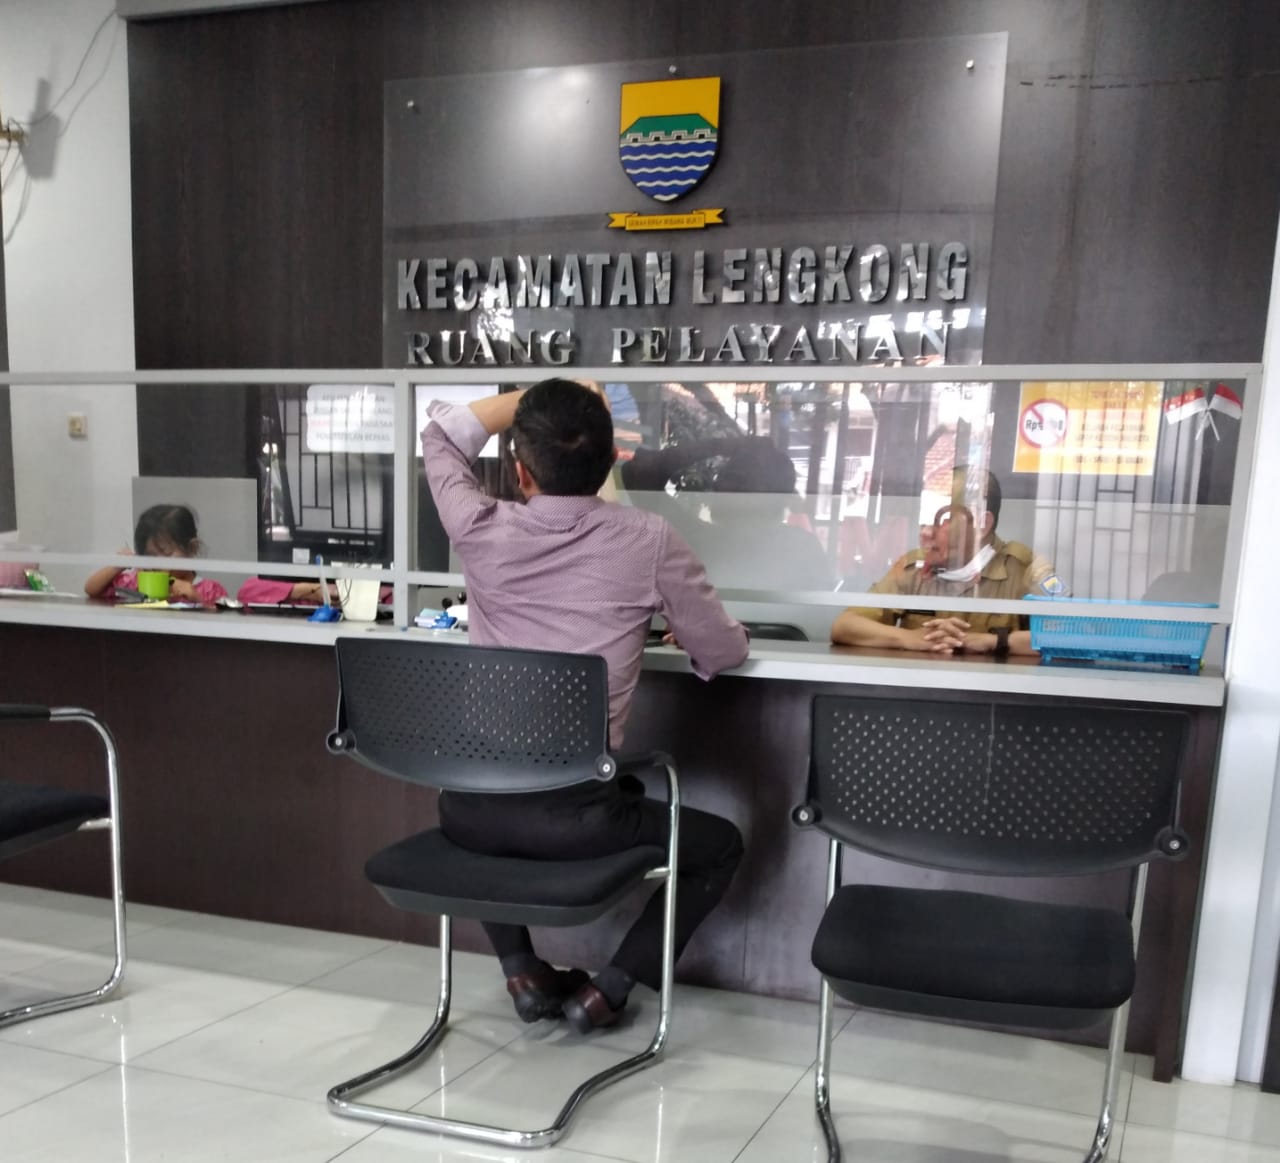 Kantor layanan Kecamatan Lengkong Kota Bandung. Kecamatan turut berupaya mendampingi UMKM agar makin tumbuh. (HENDRIK MUCHLISON/JABAR EKSPRES)